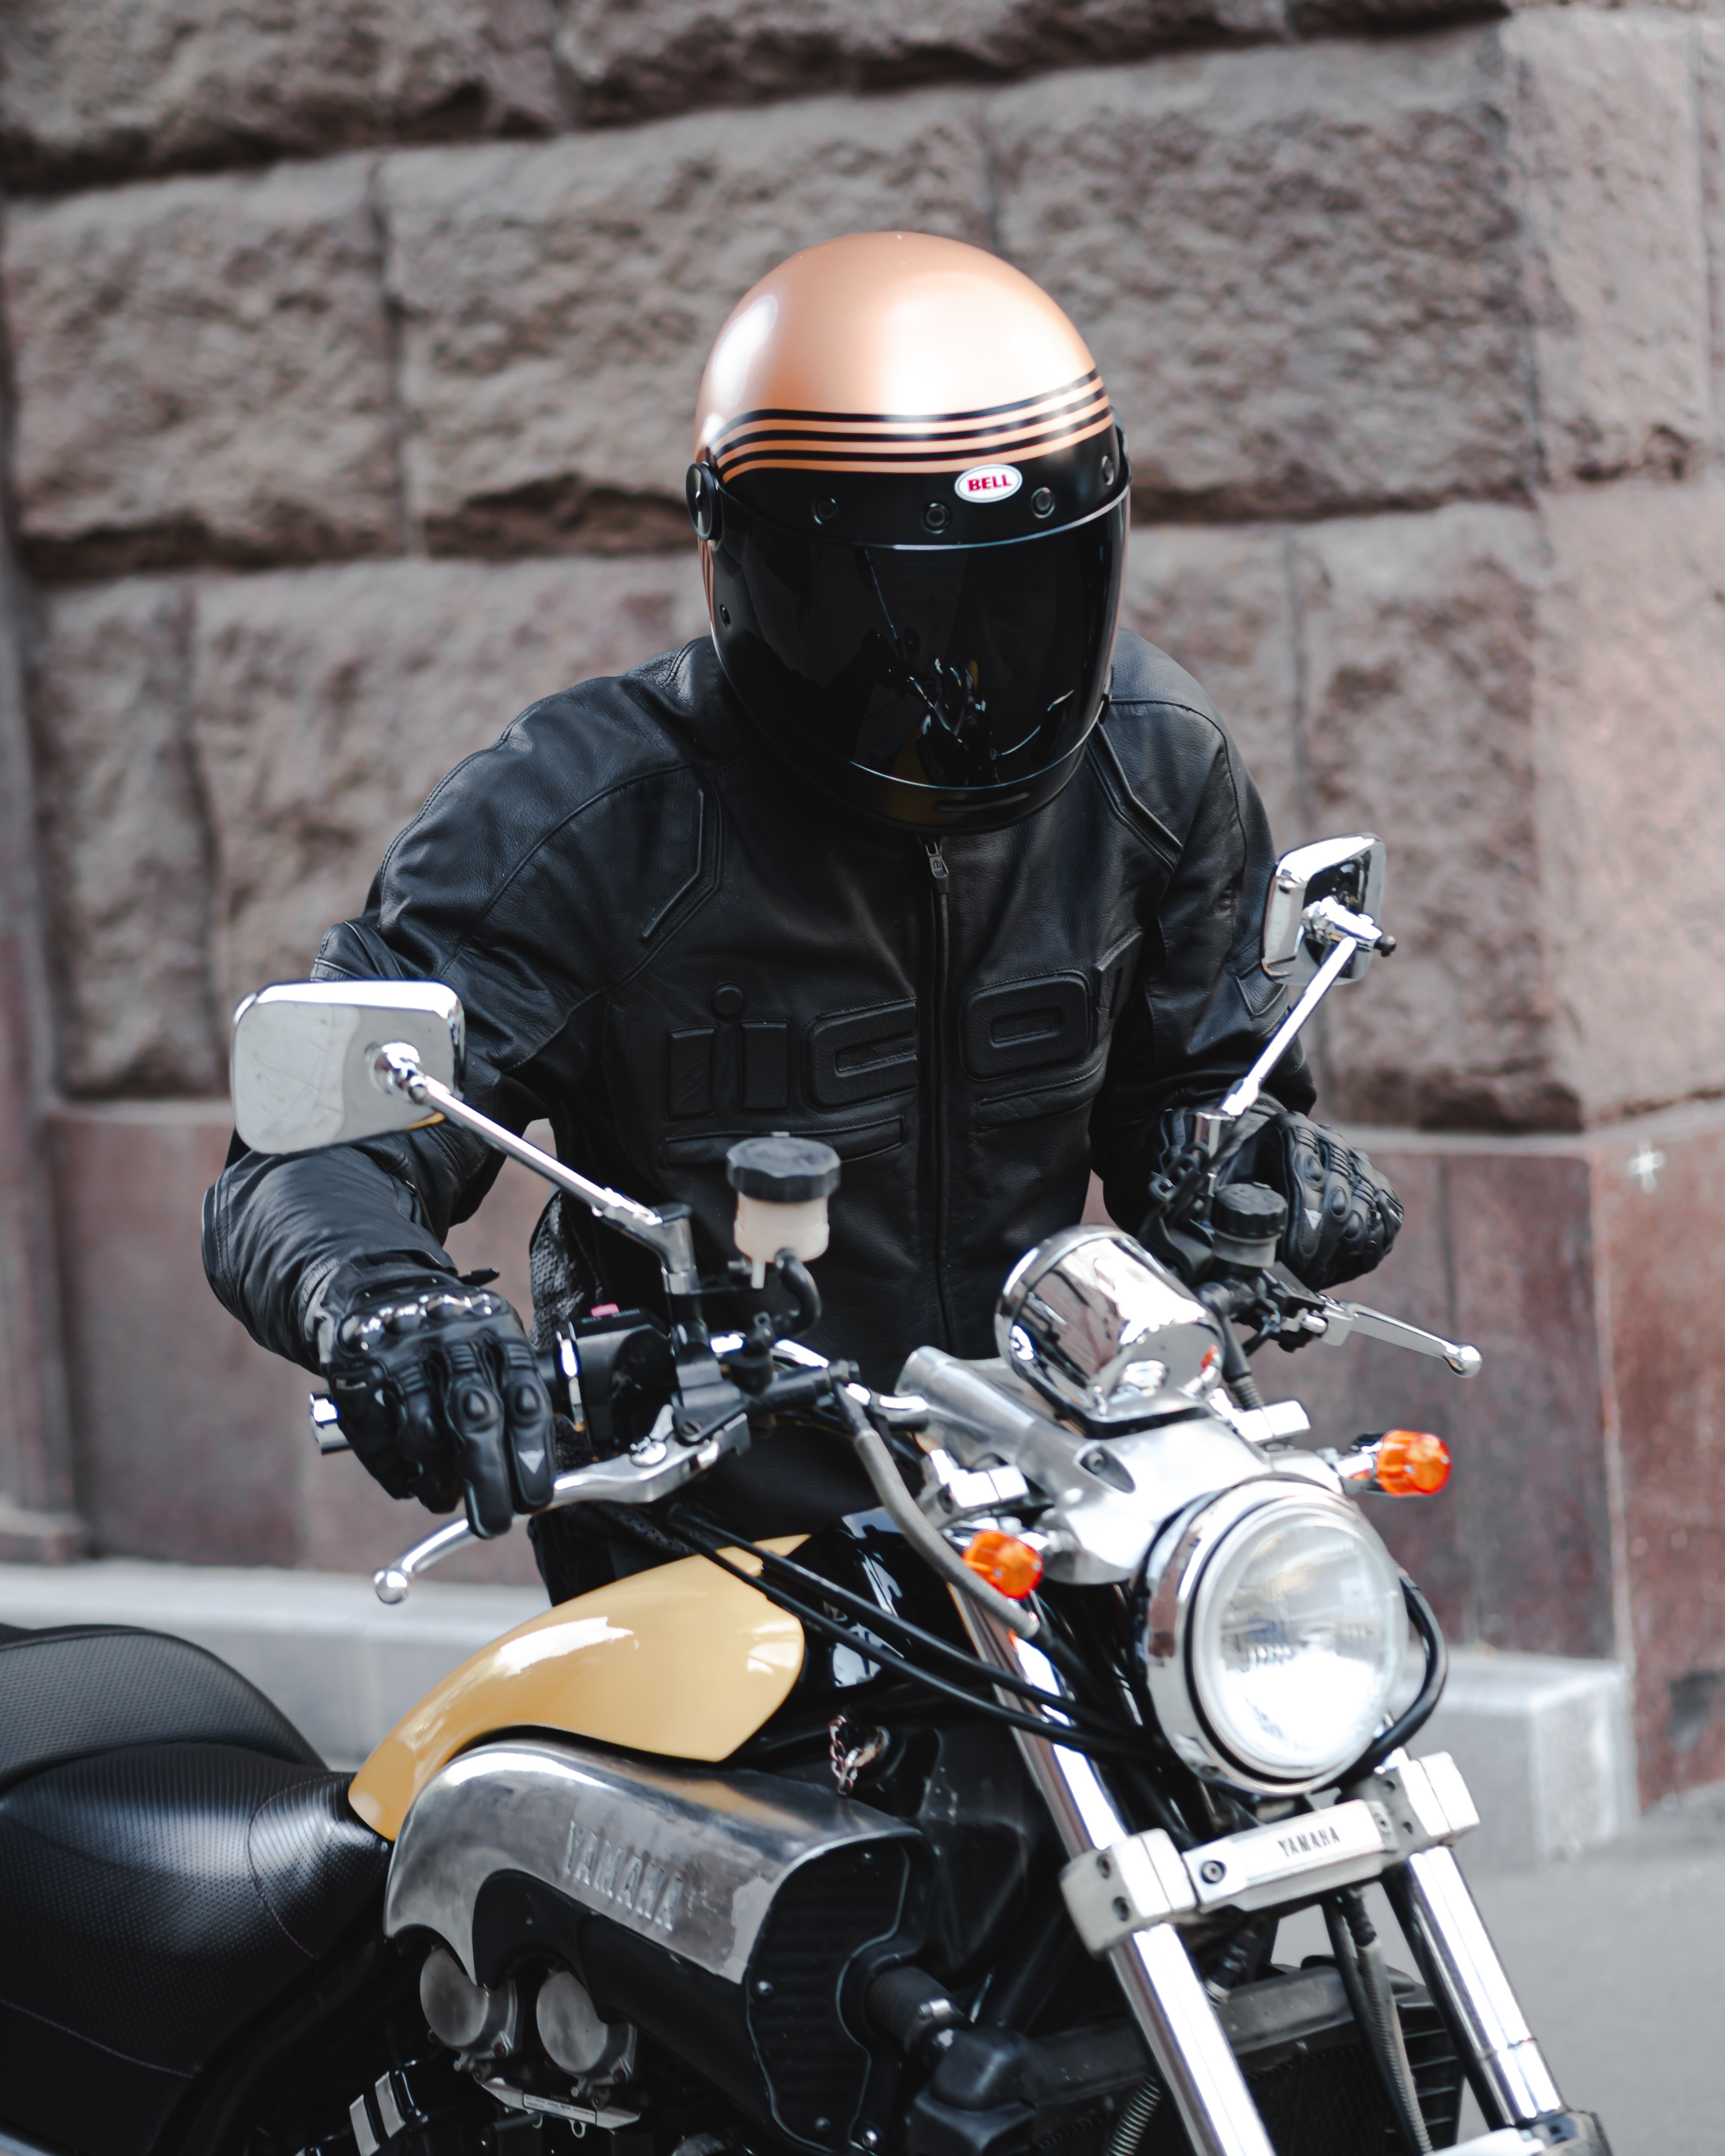 helmet, motorcycles, motorcyclist, motorcycle, bike, biker